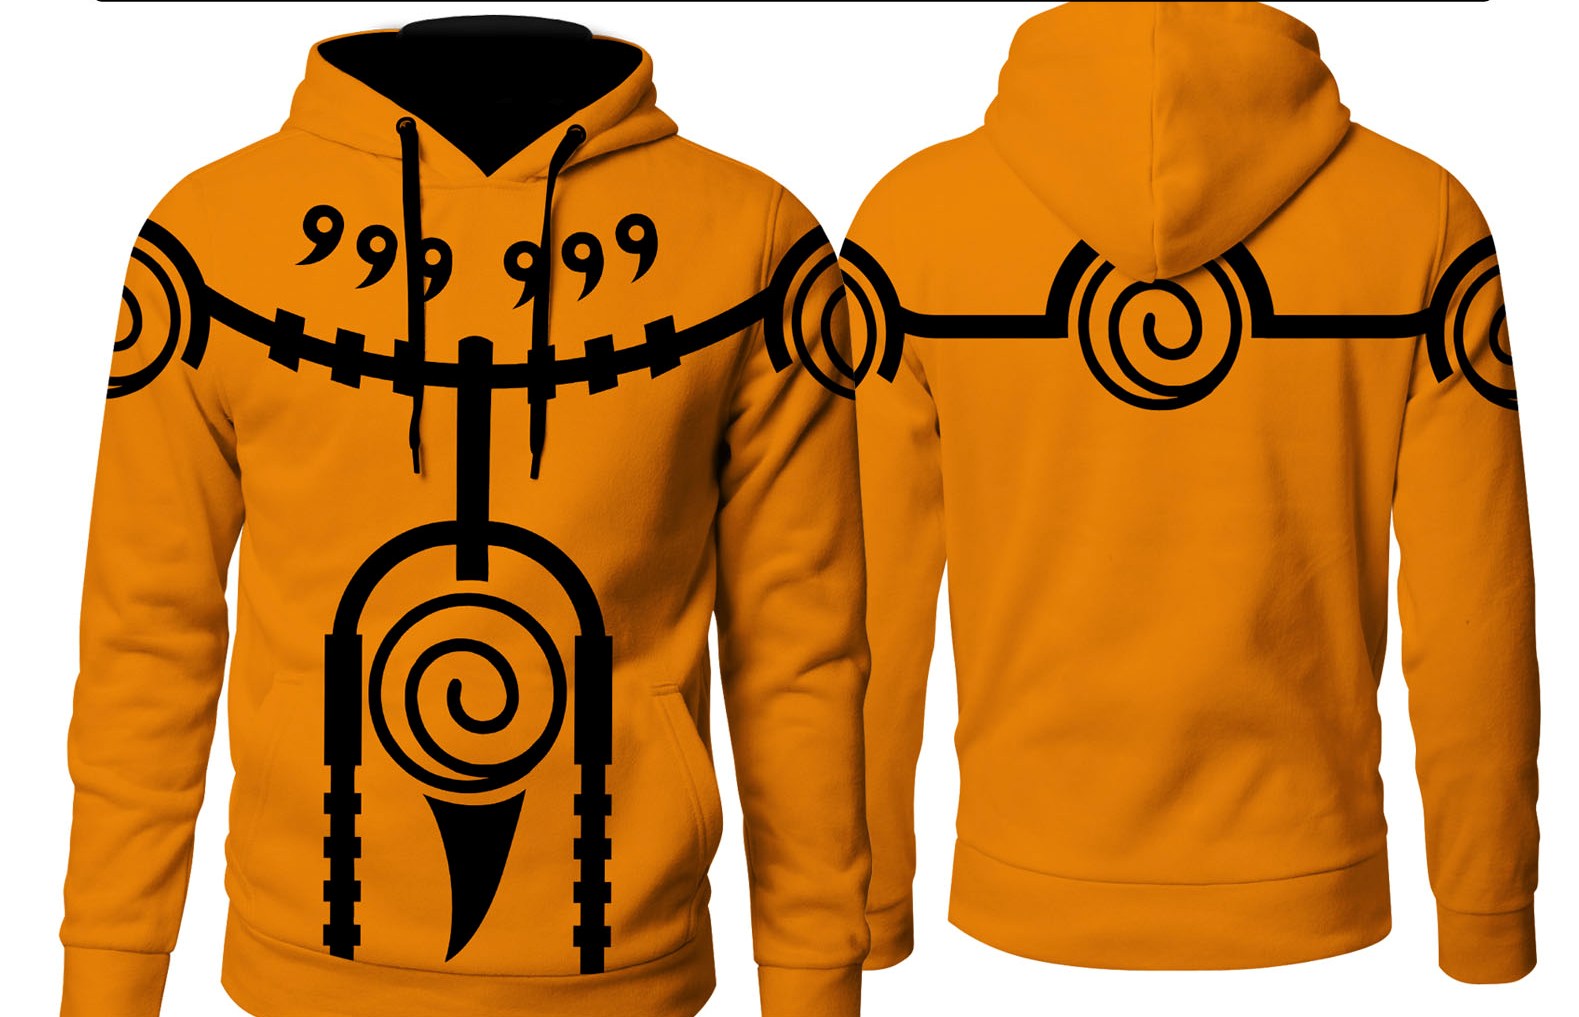 Harga Jaket Naruto Hokage Jaket Naruto Murah Jaket Naruto Online